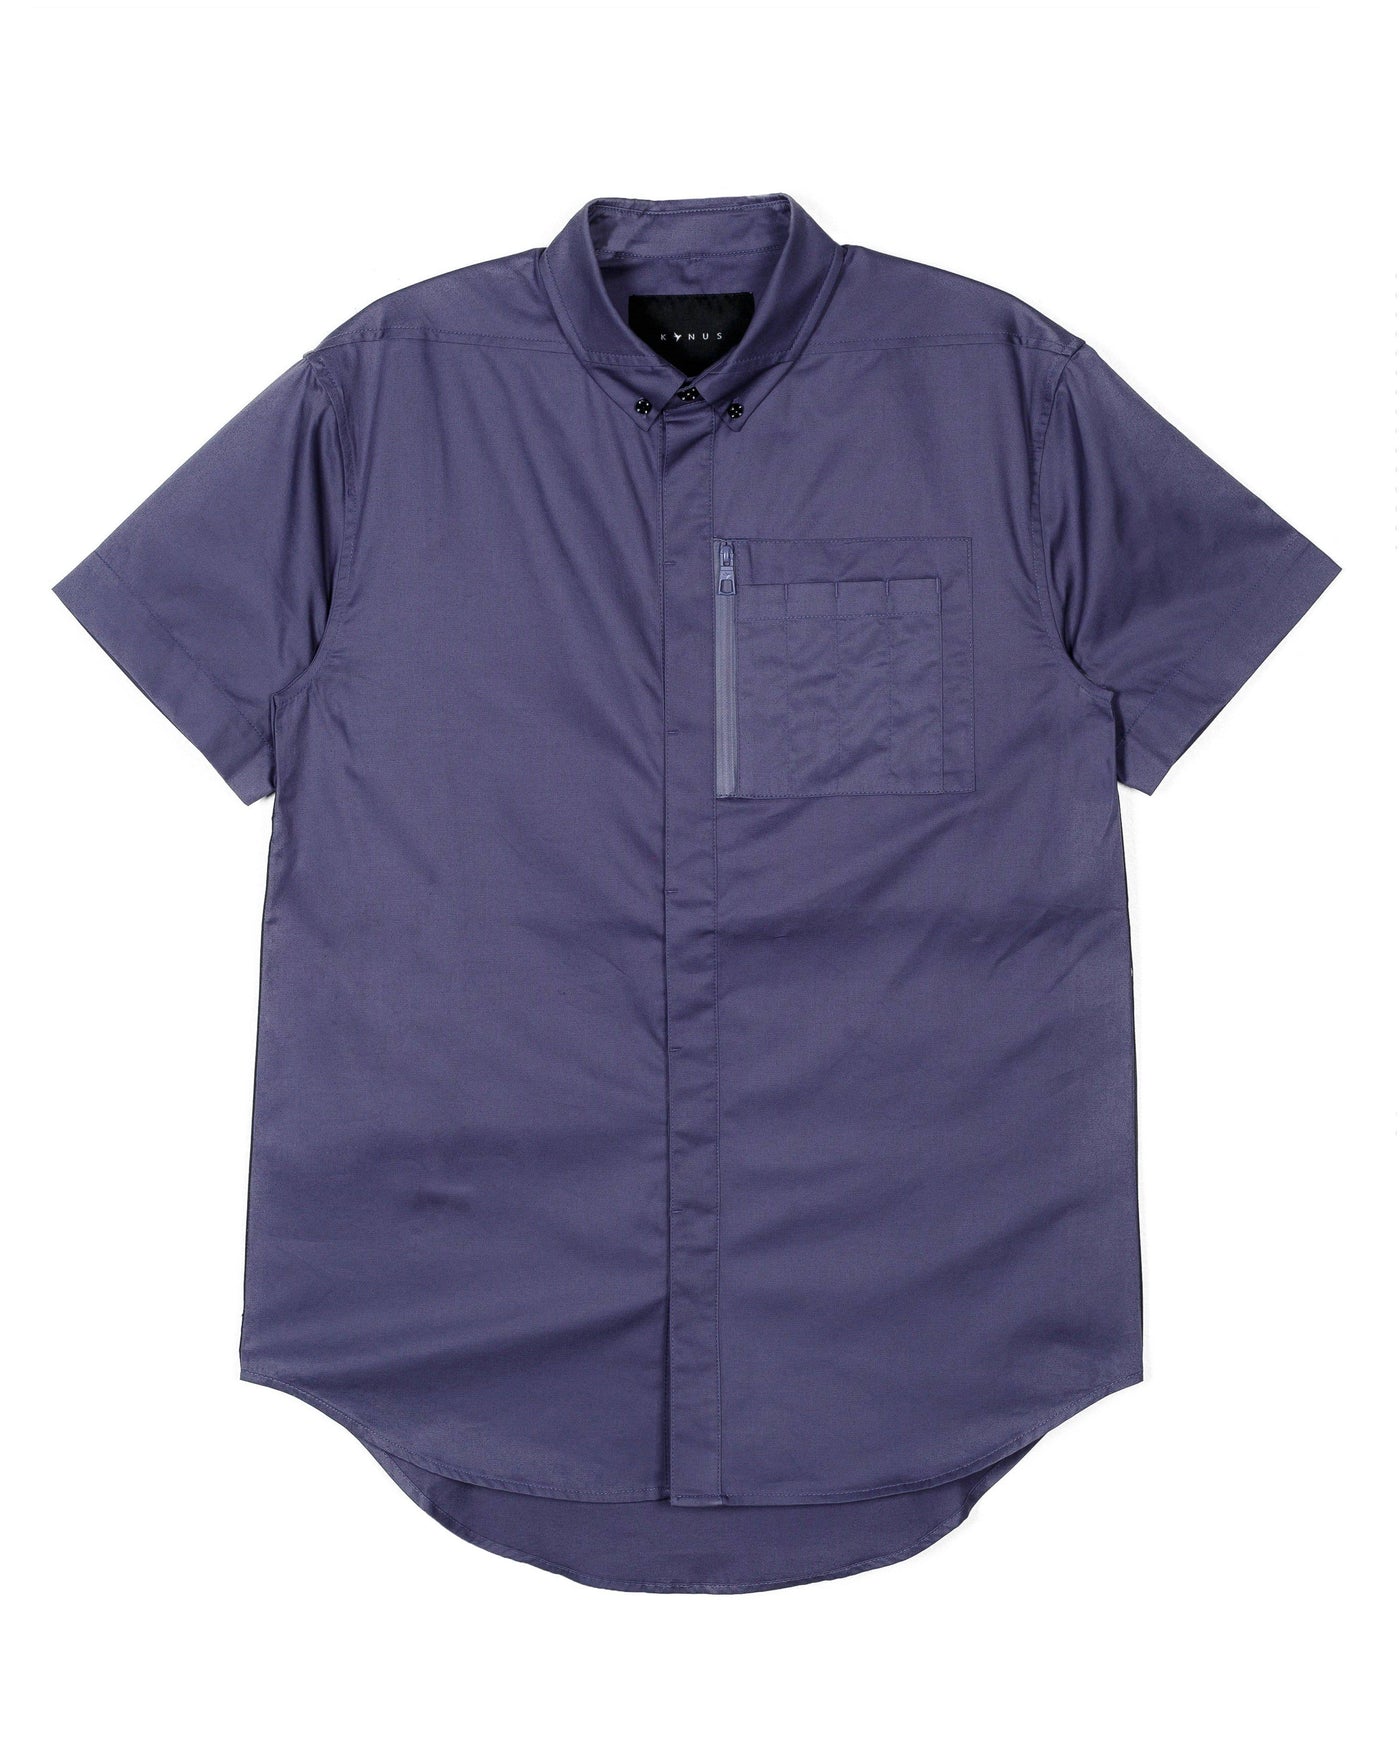 Konus Men's Reflective Short Sleeve Button Down in Cobalt by Shop at Konus